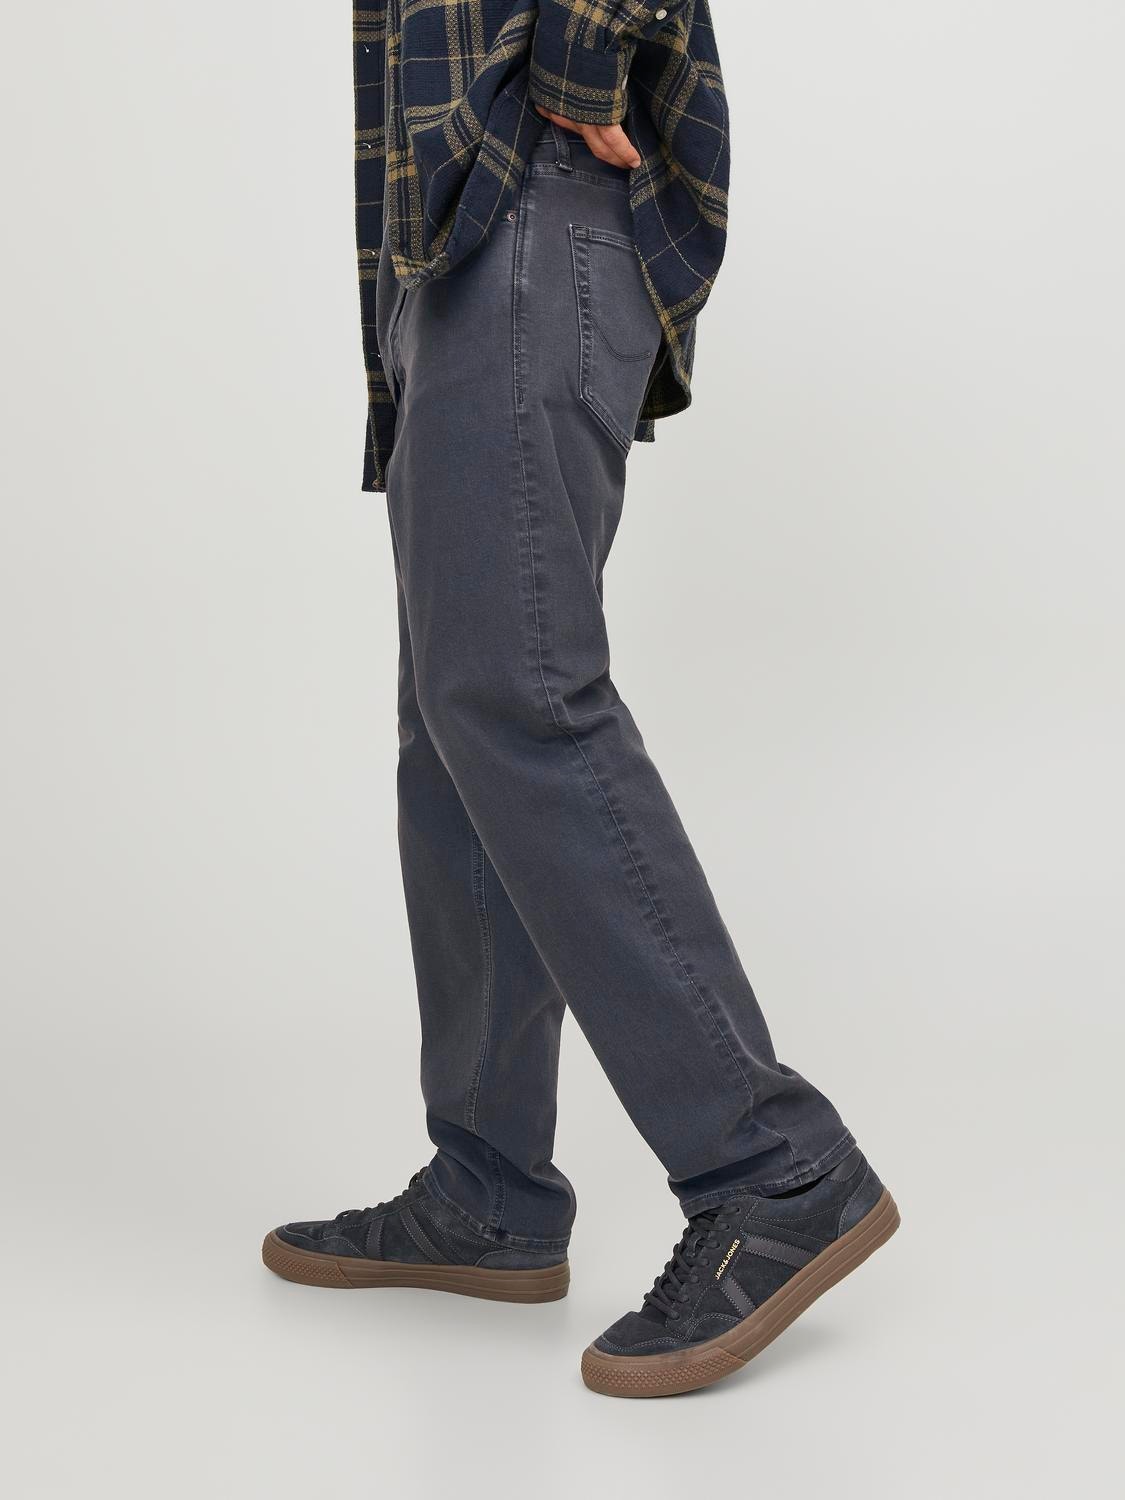 Jack & Jones JJIMIKE JJORIGINAL AM 405 BF Jeans Tapered Fit -Asphalt - 12248319